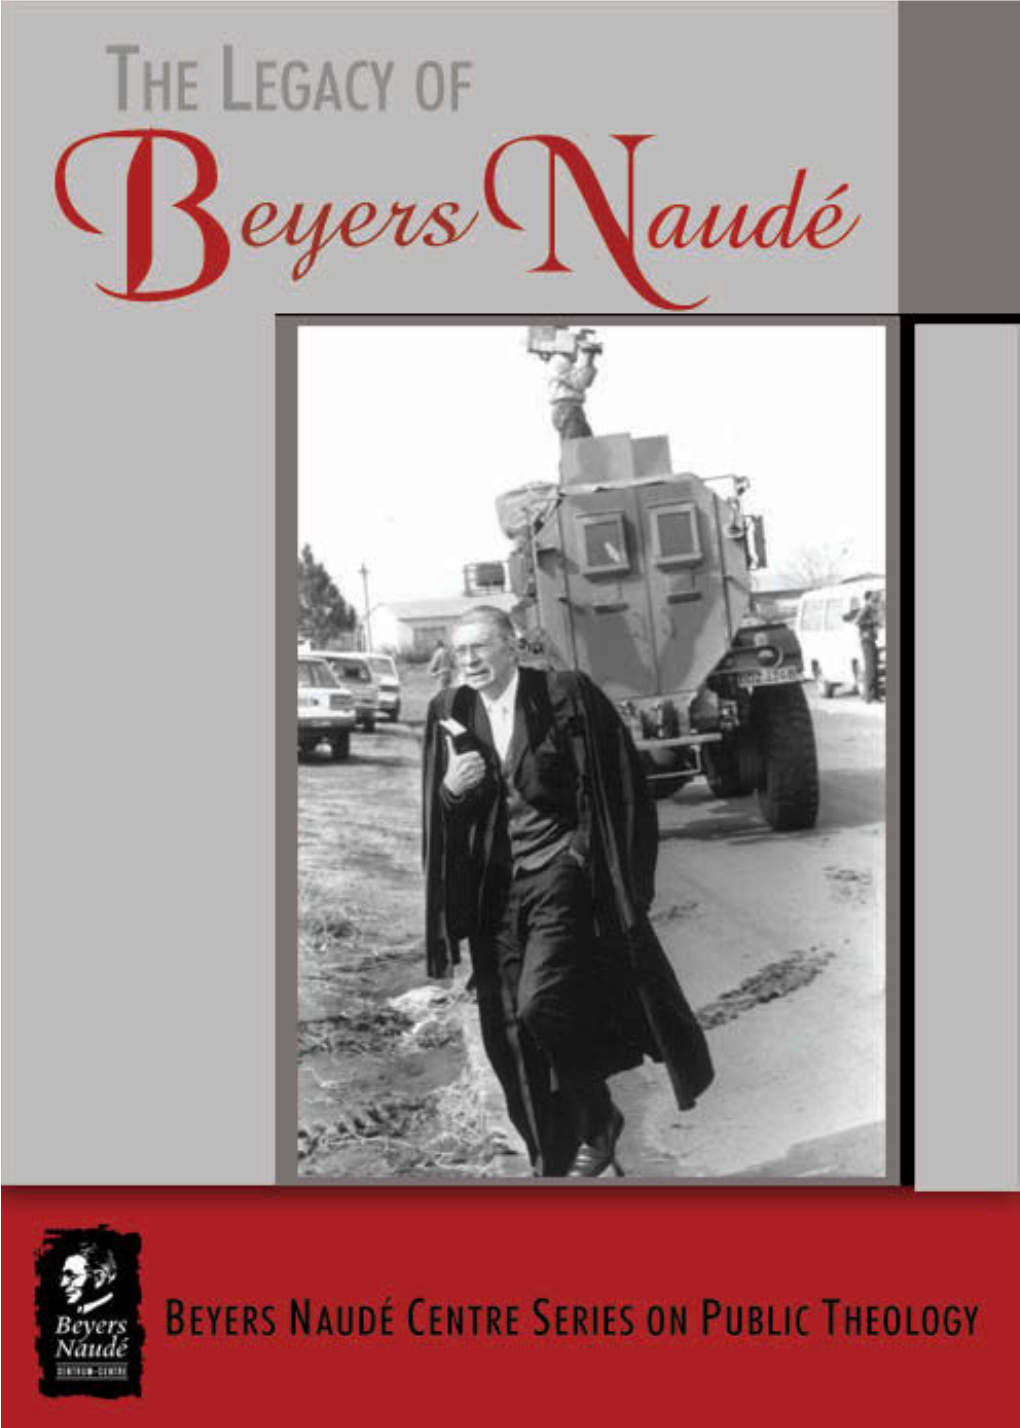 The Legacy of Beyers Naudé